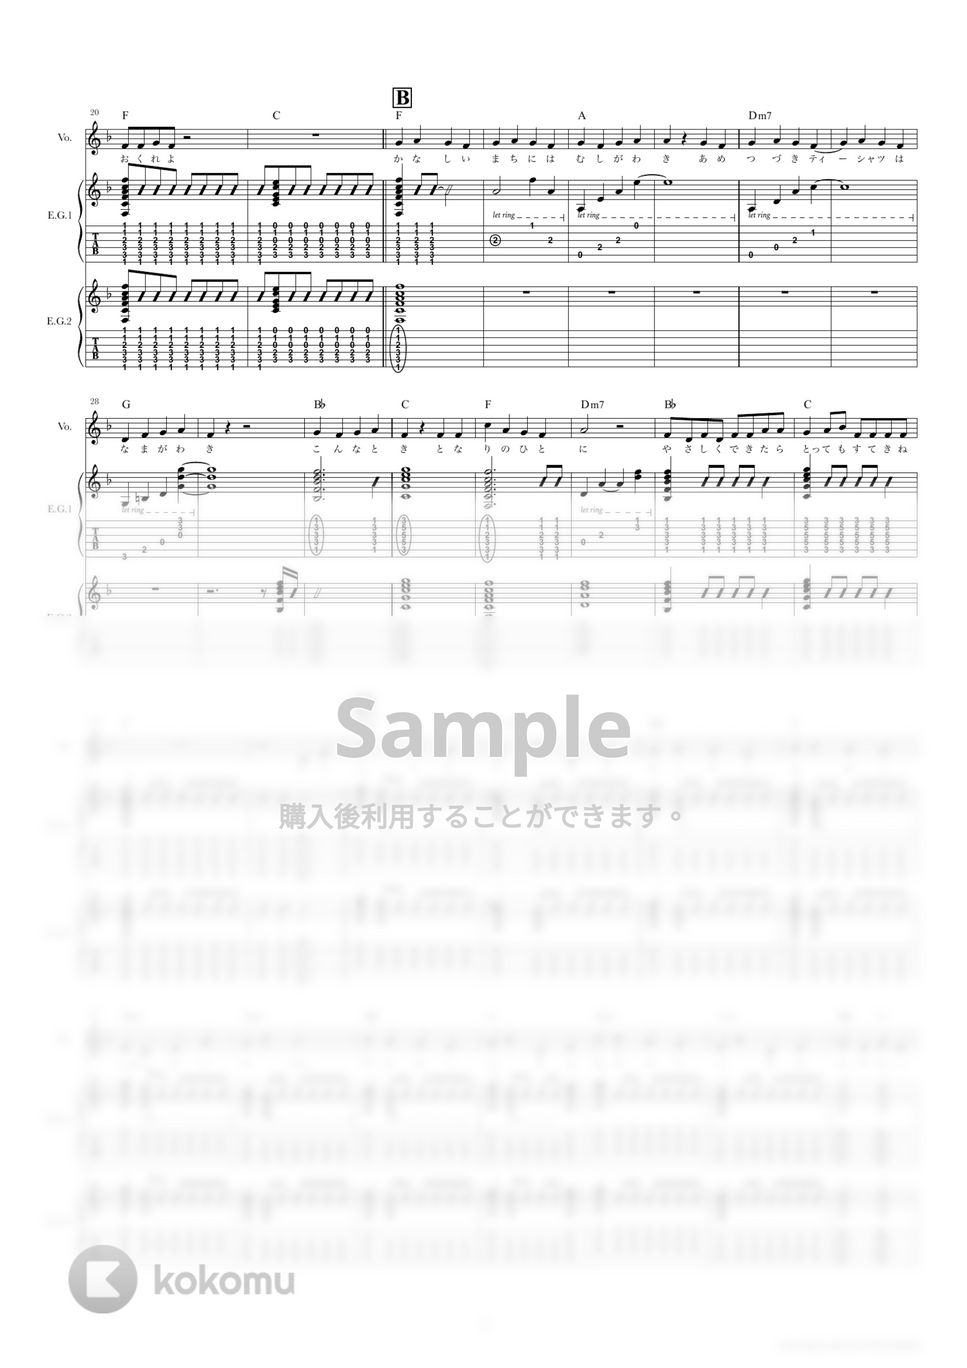 Hump Back - ティーンエイジサンセット (ギタースコア・歌詞・コード付き) by TRIAD GUITAR SCHOOL